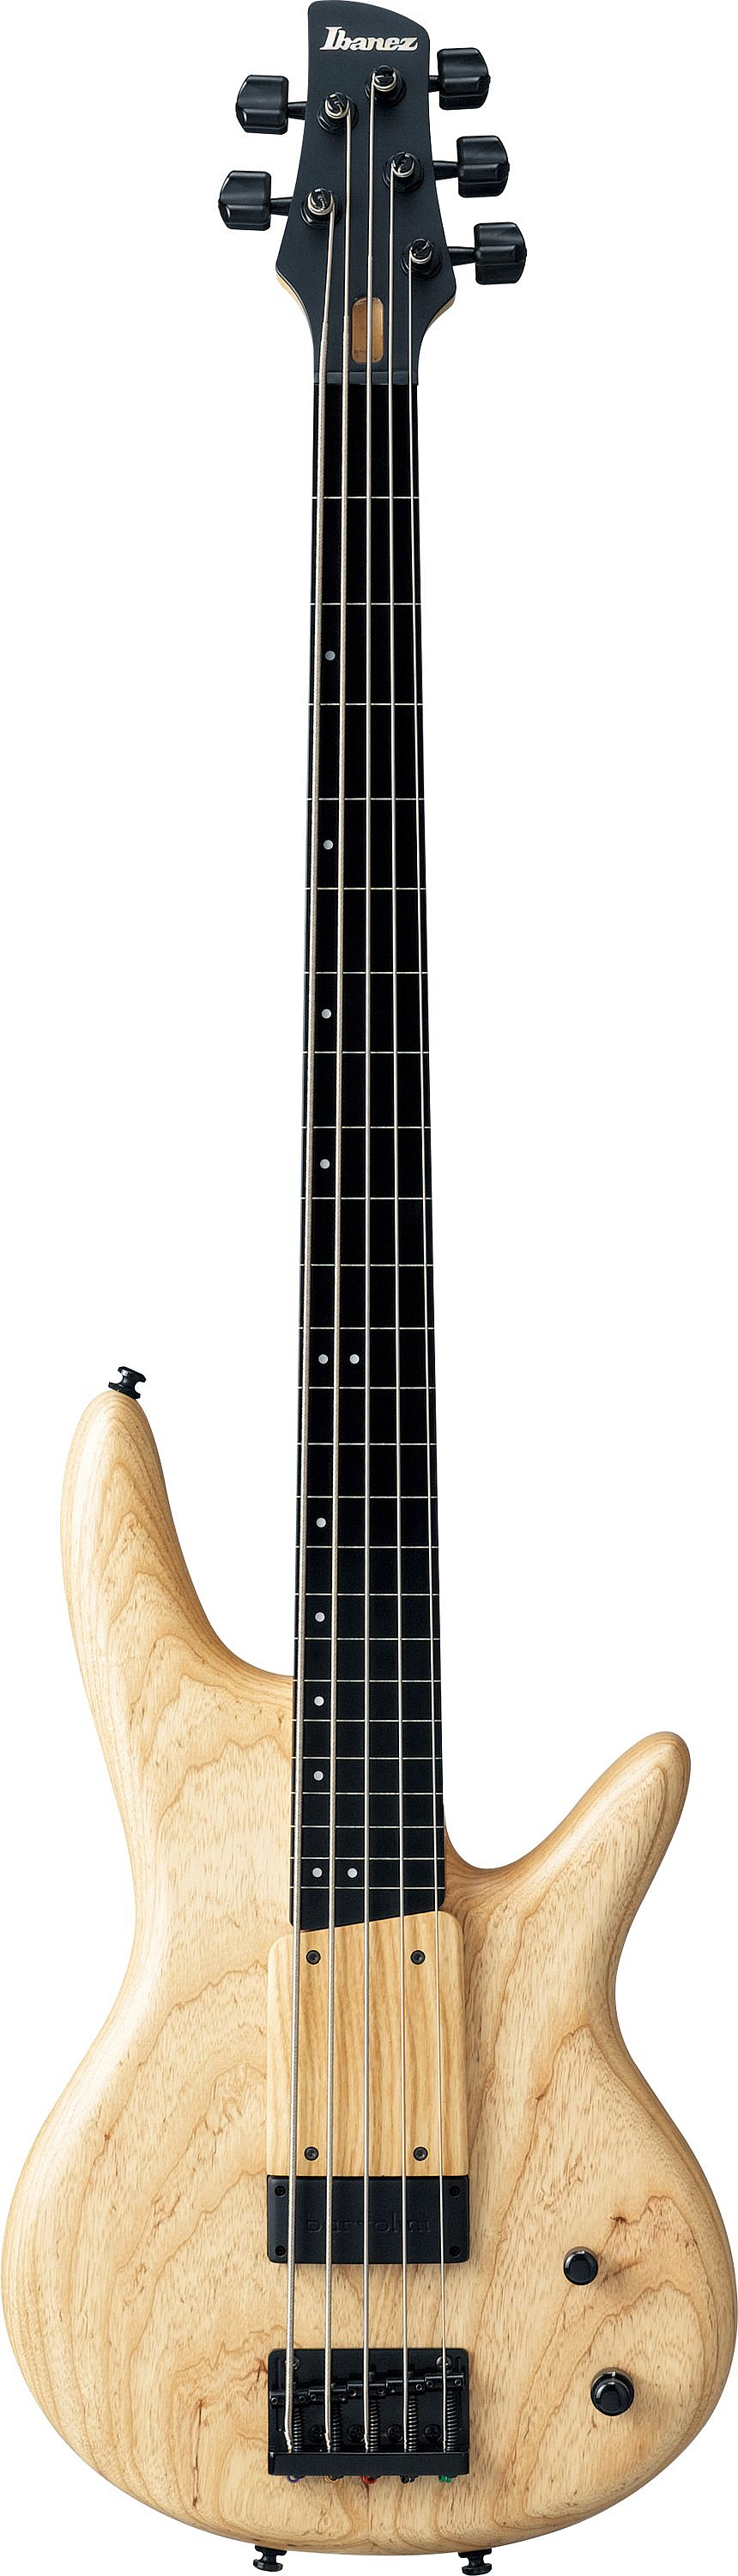 Ibanez GWB1005 NTF 5-струнная бас-гитара | Продукция IBANEZ